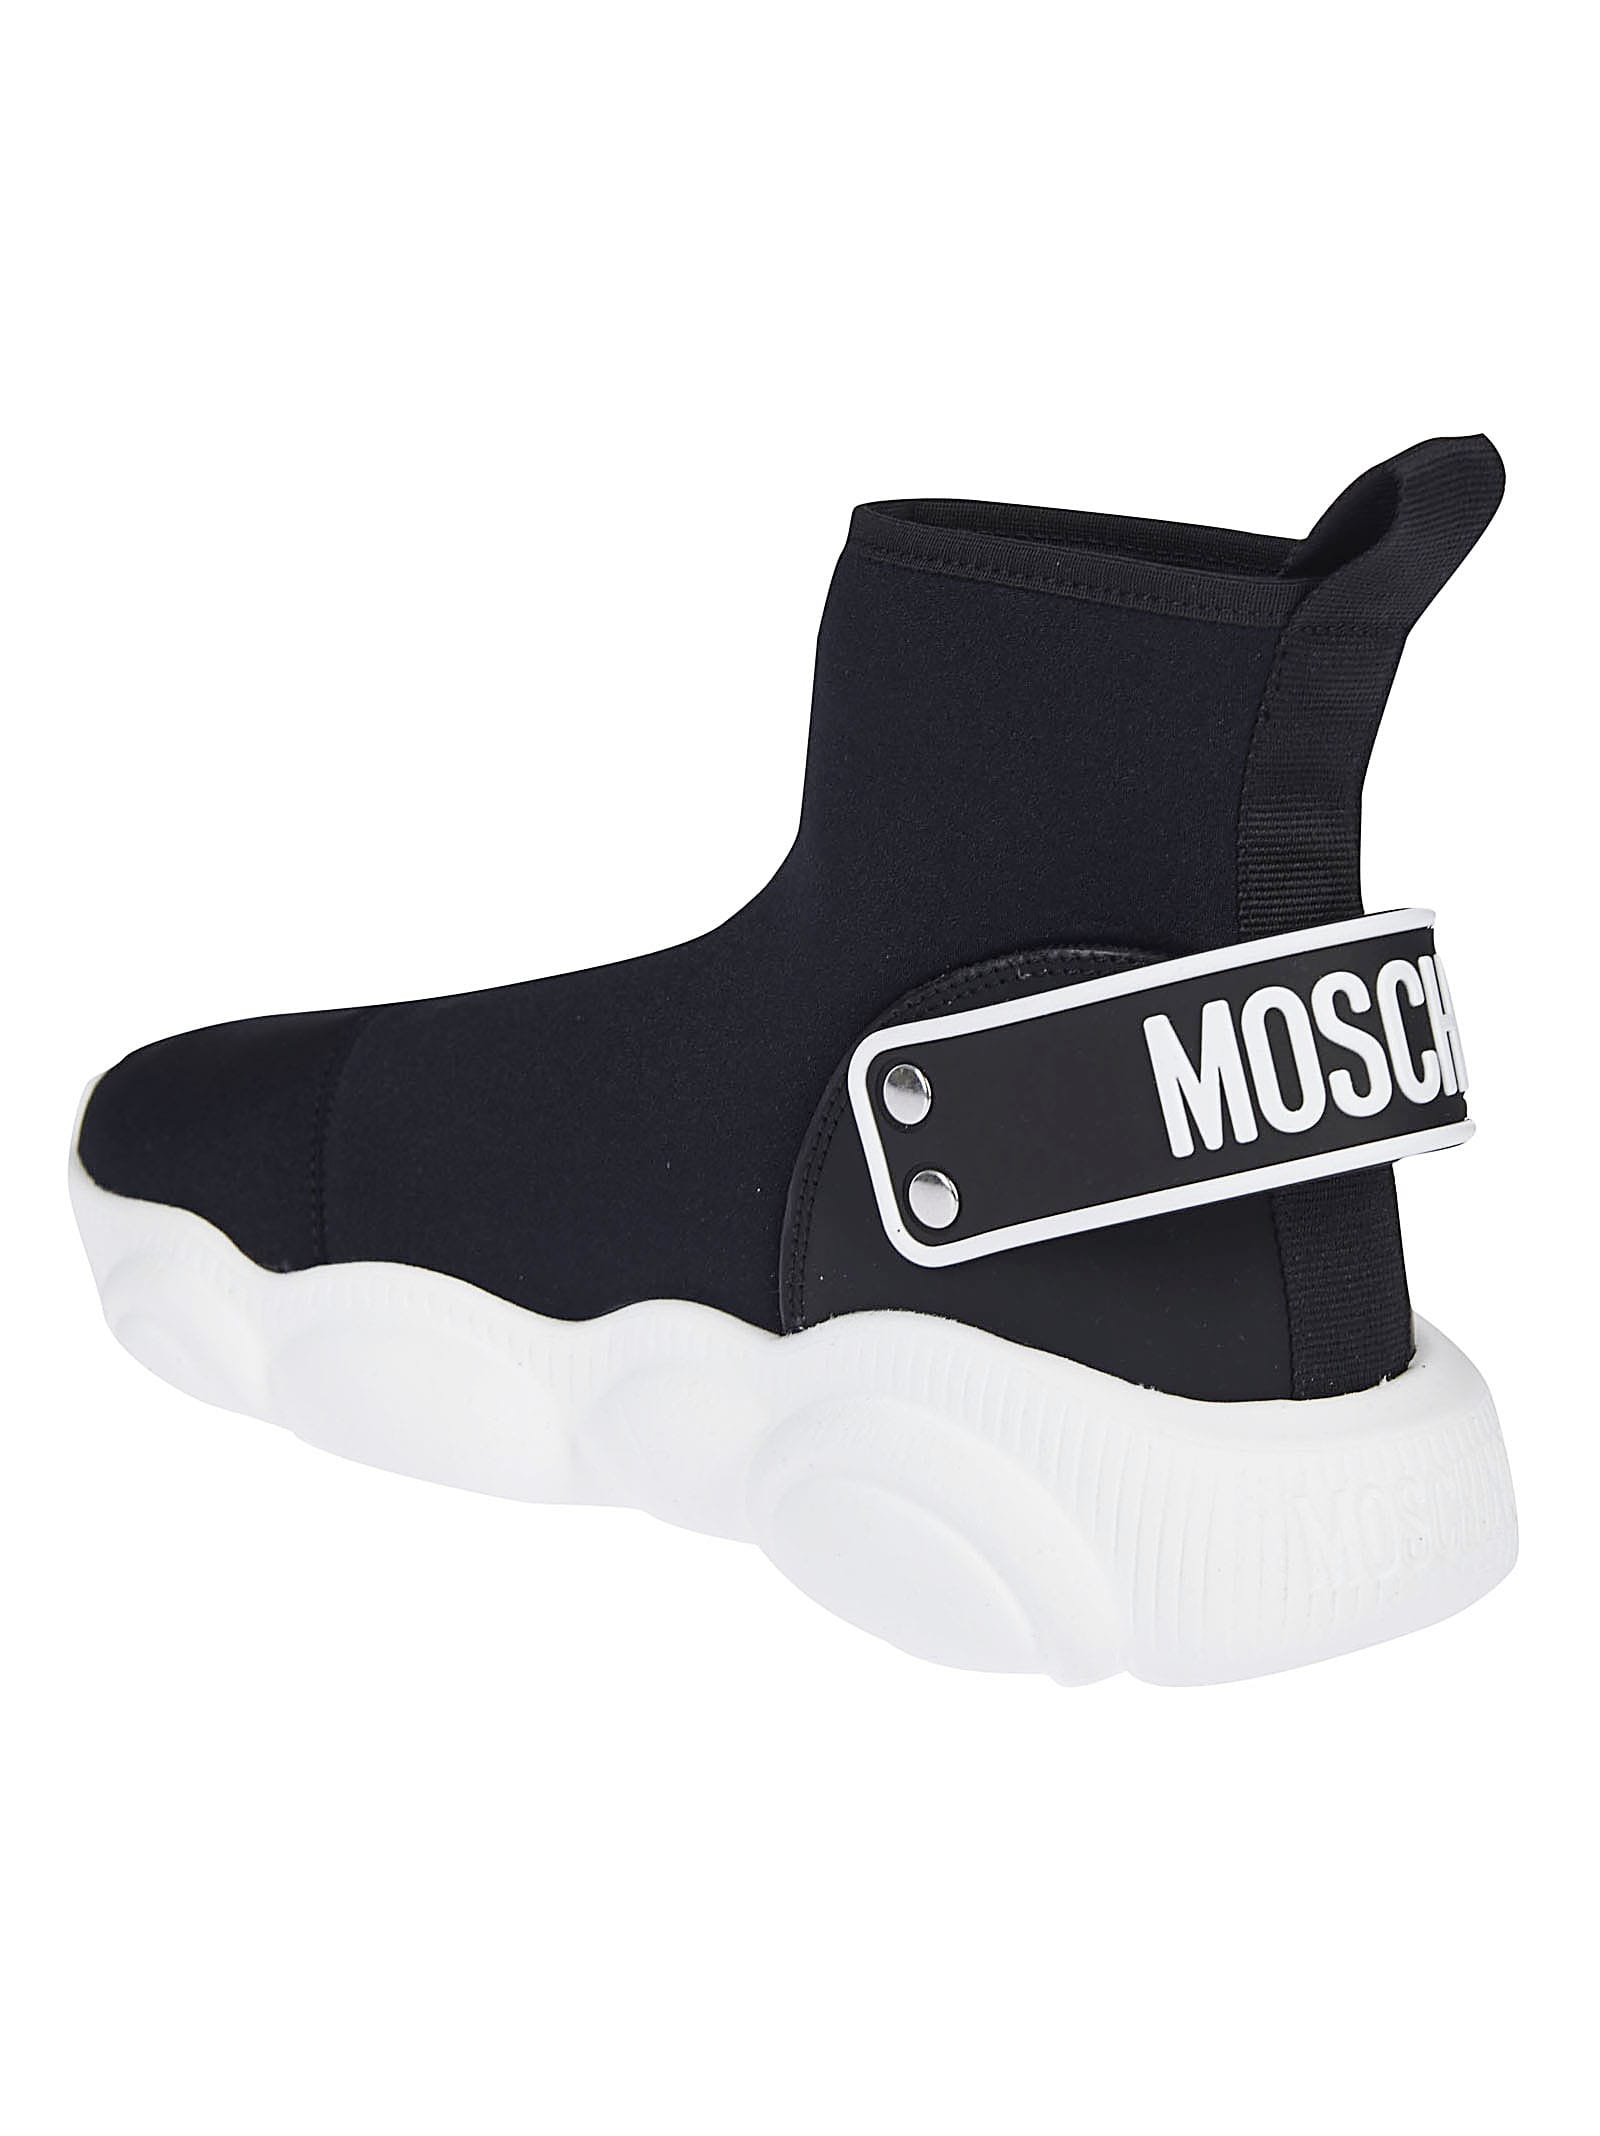 moschino socks shoes